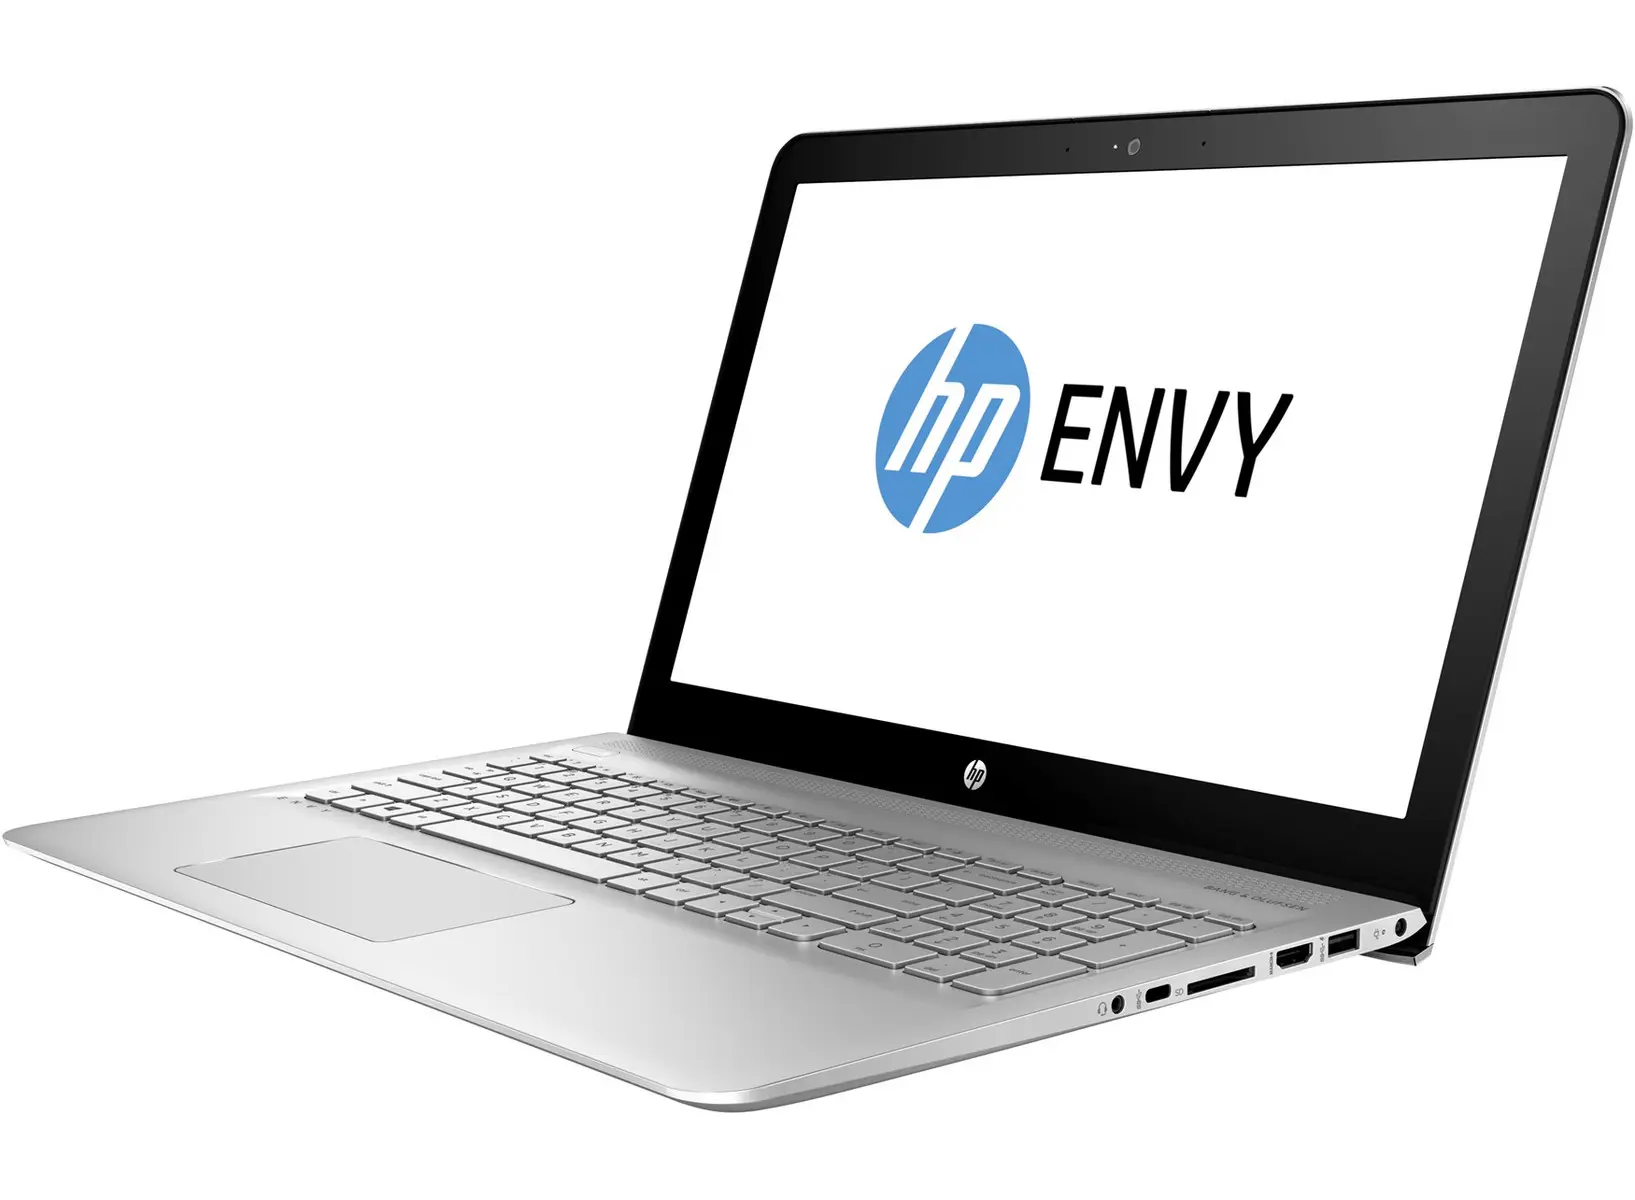 hewlett packard envy notebook - Is HP Envy a laptop or notebook